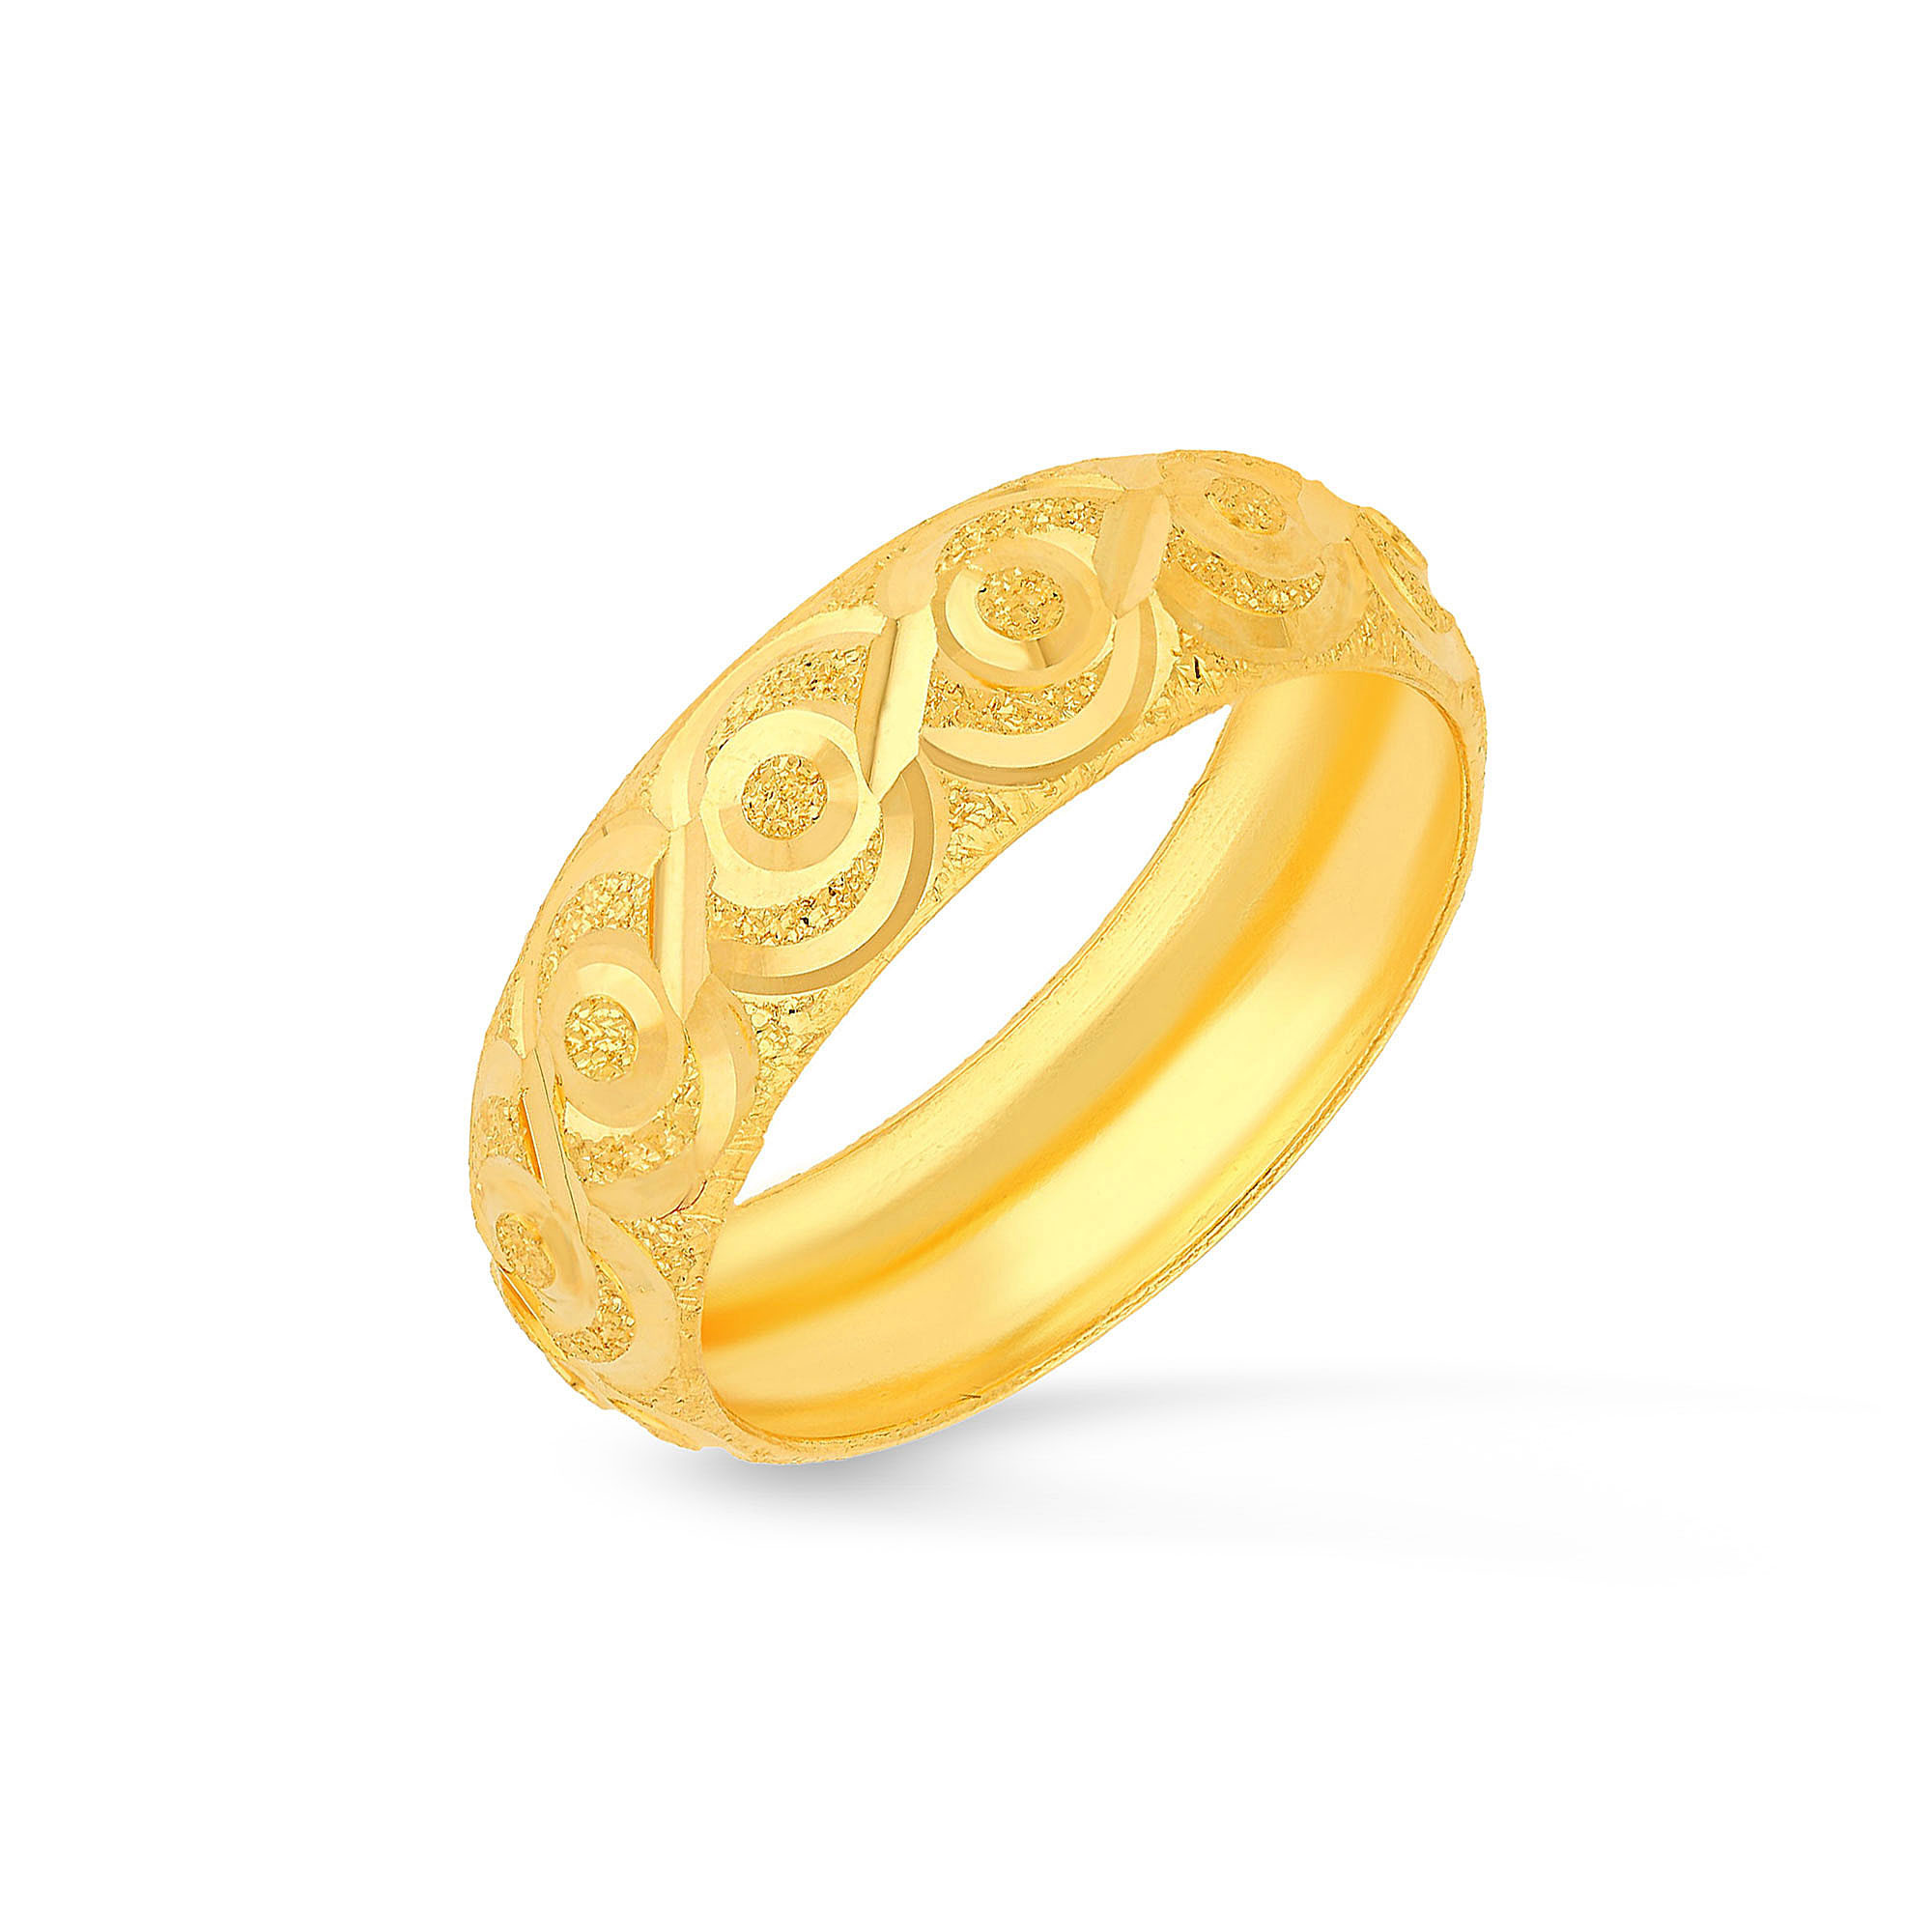 Buy Malabar Gold Ring RG887379 for Women Online | Malabar Gold & Diamonds